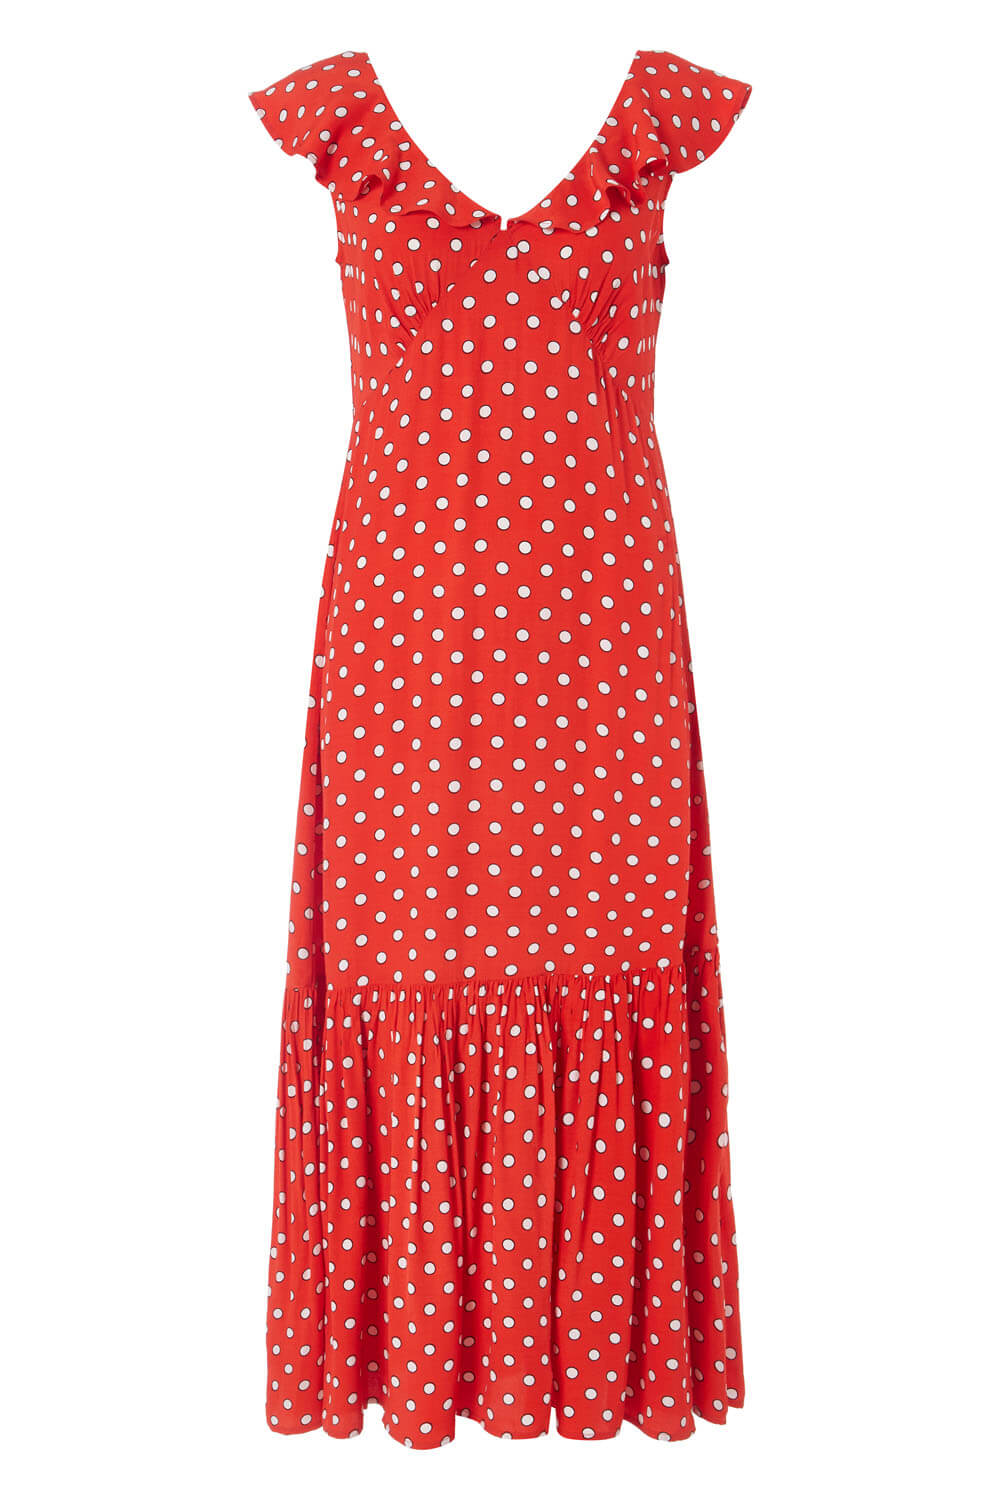 Polka Dot Frilly Midi Dress in Red - Roman Originals UK